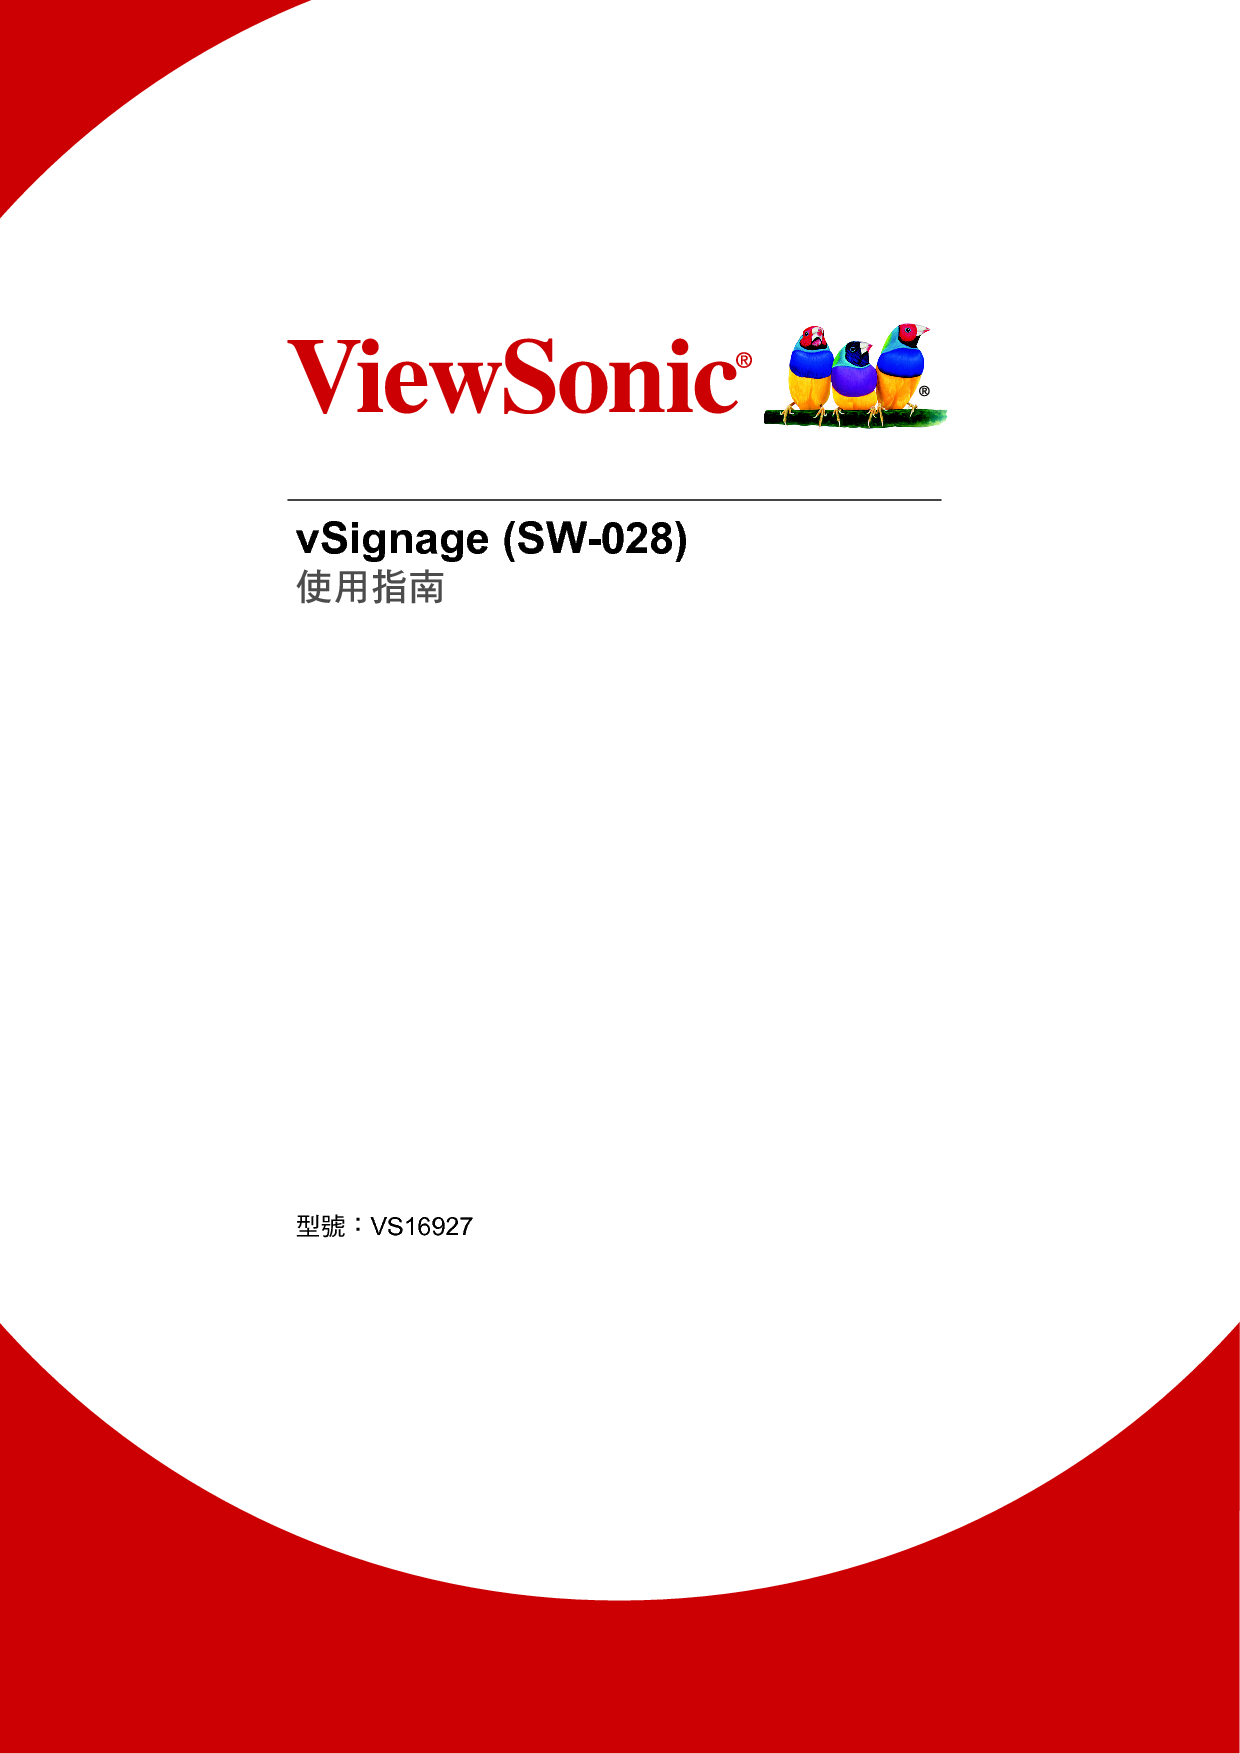 优派 ViewSonic SW-028, vSignage 繁体 使用手册 封面